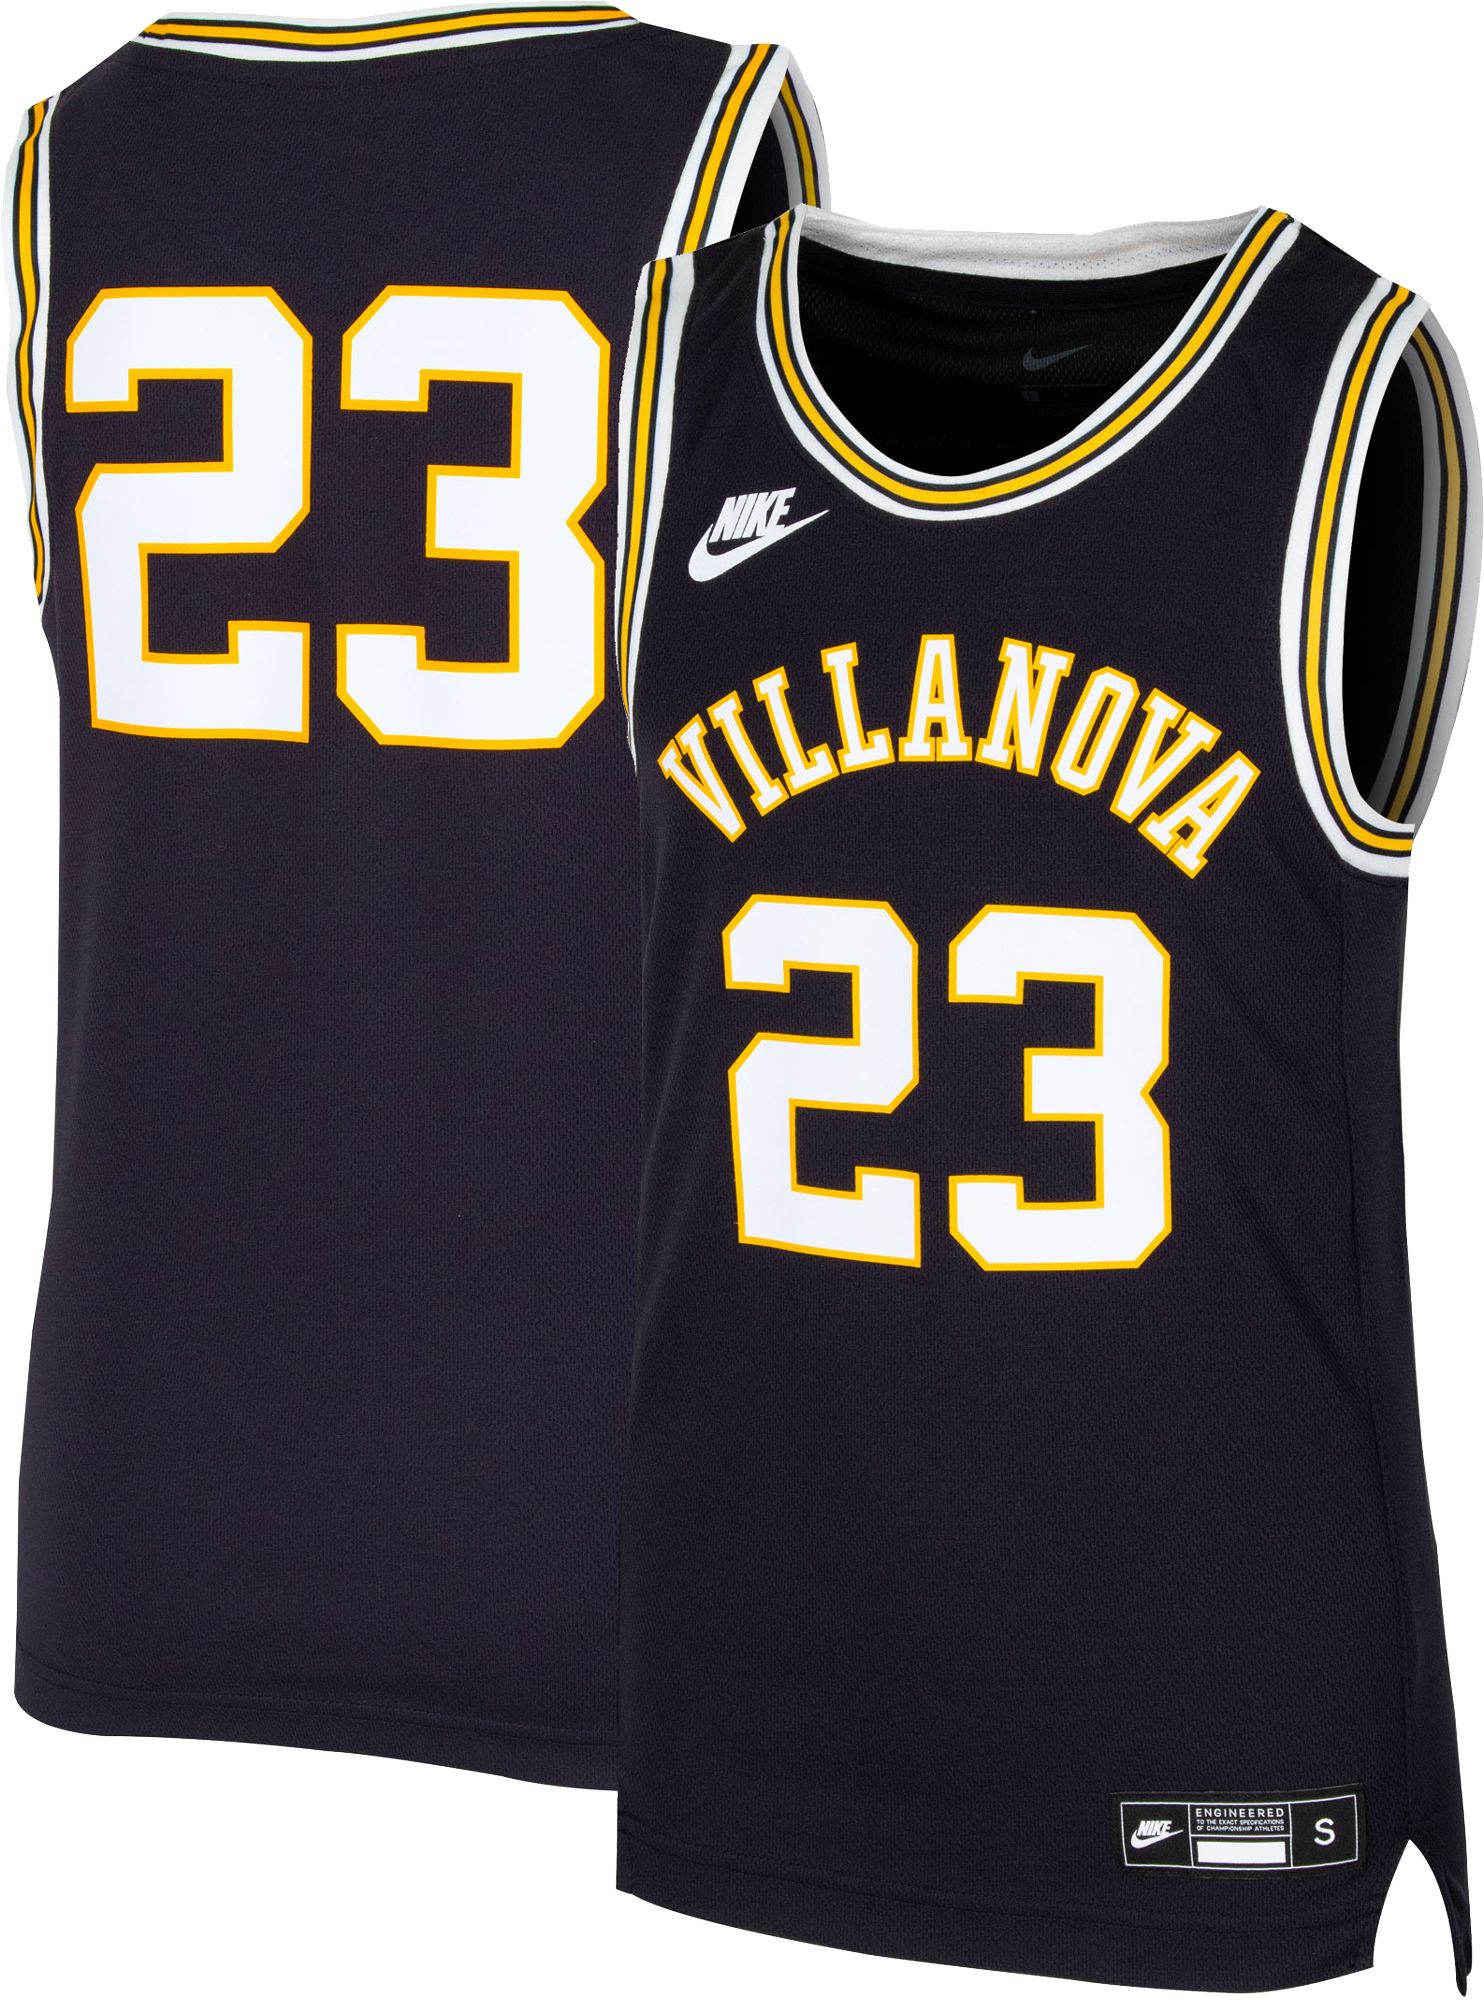 villanova basketball jersey